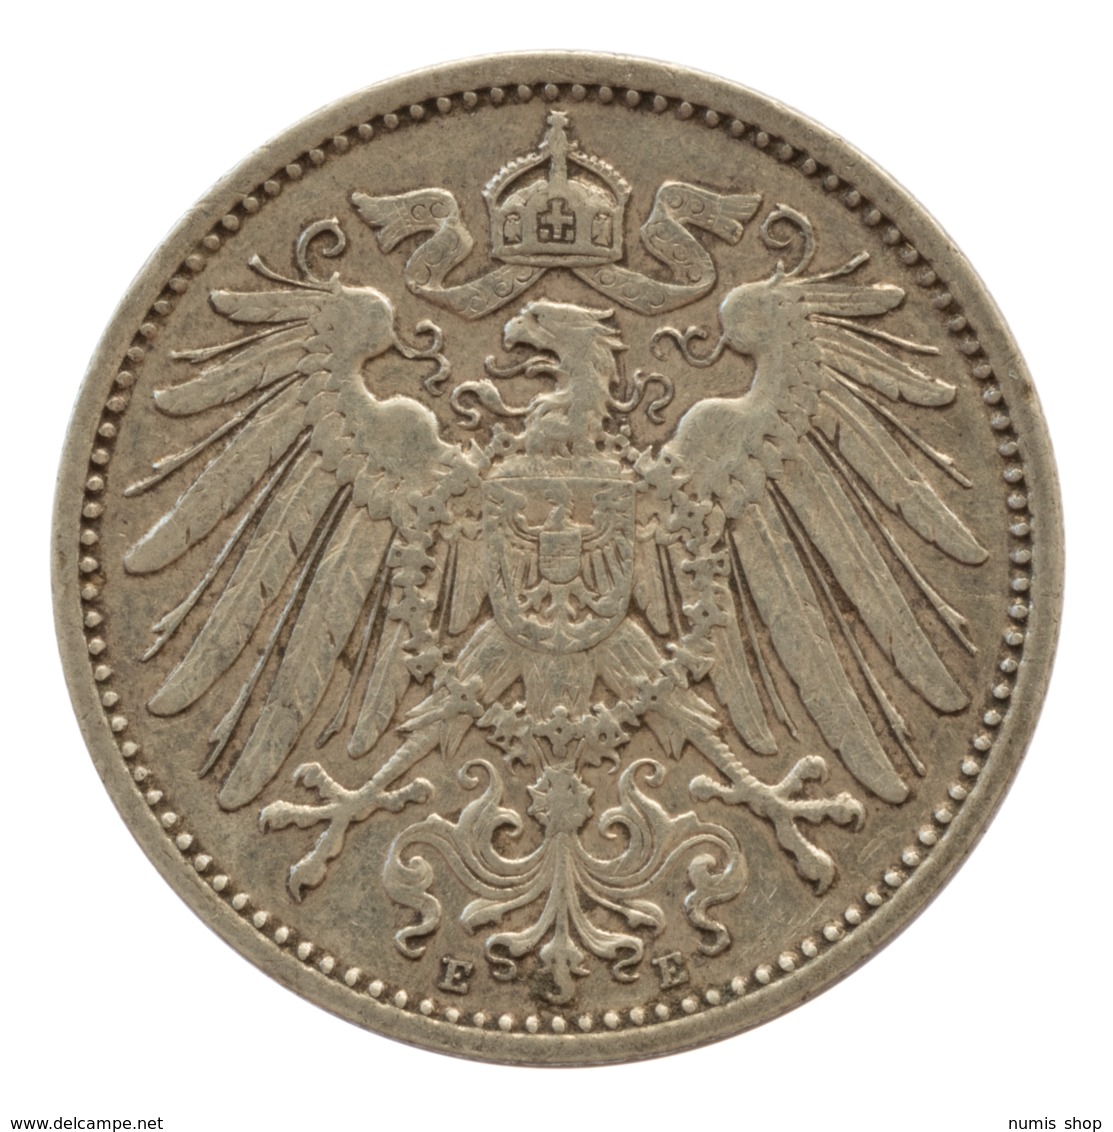 GERMANY - EMPIRE - 1 Mark - 1907 - E - Freiberg - Silver - #DE058 - 1 Mark